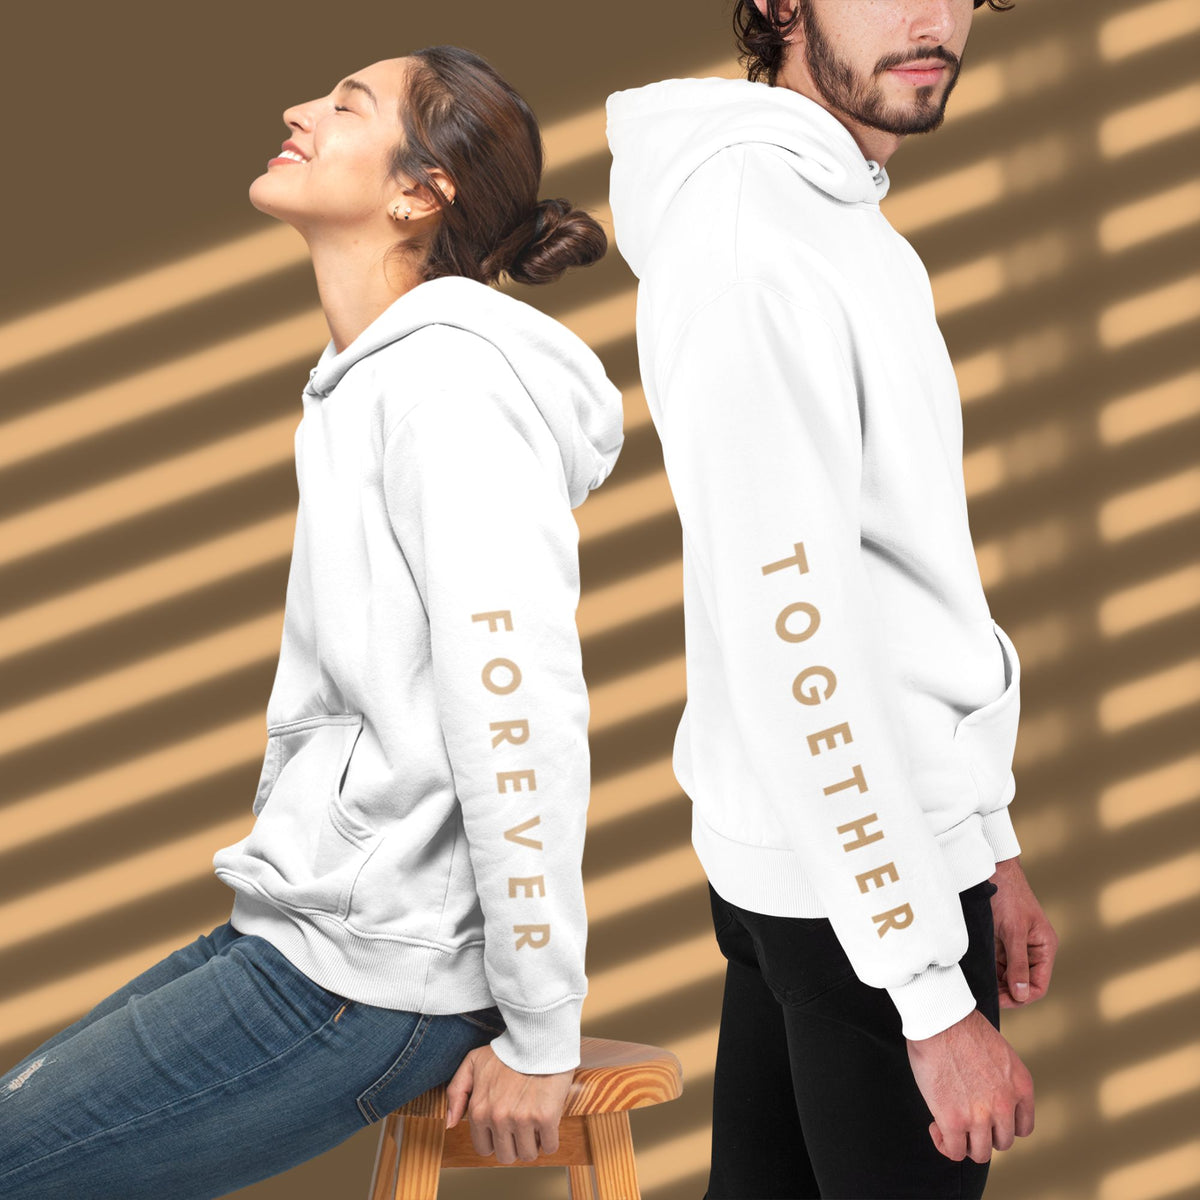 Personalized-couple-hoodies-white-sleeve-printed-addon-gogirgit